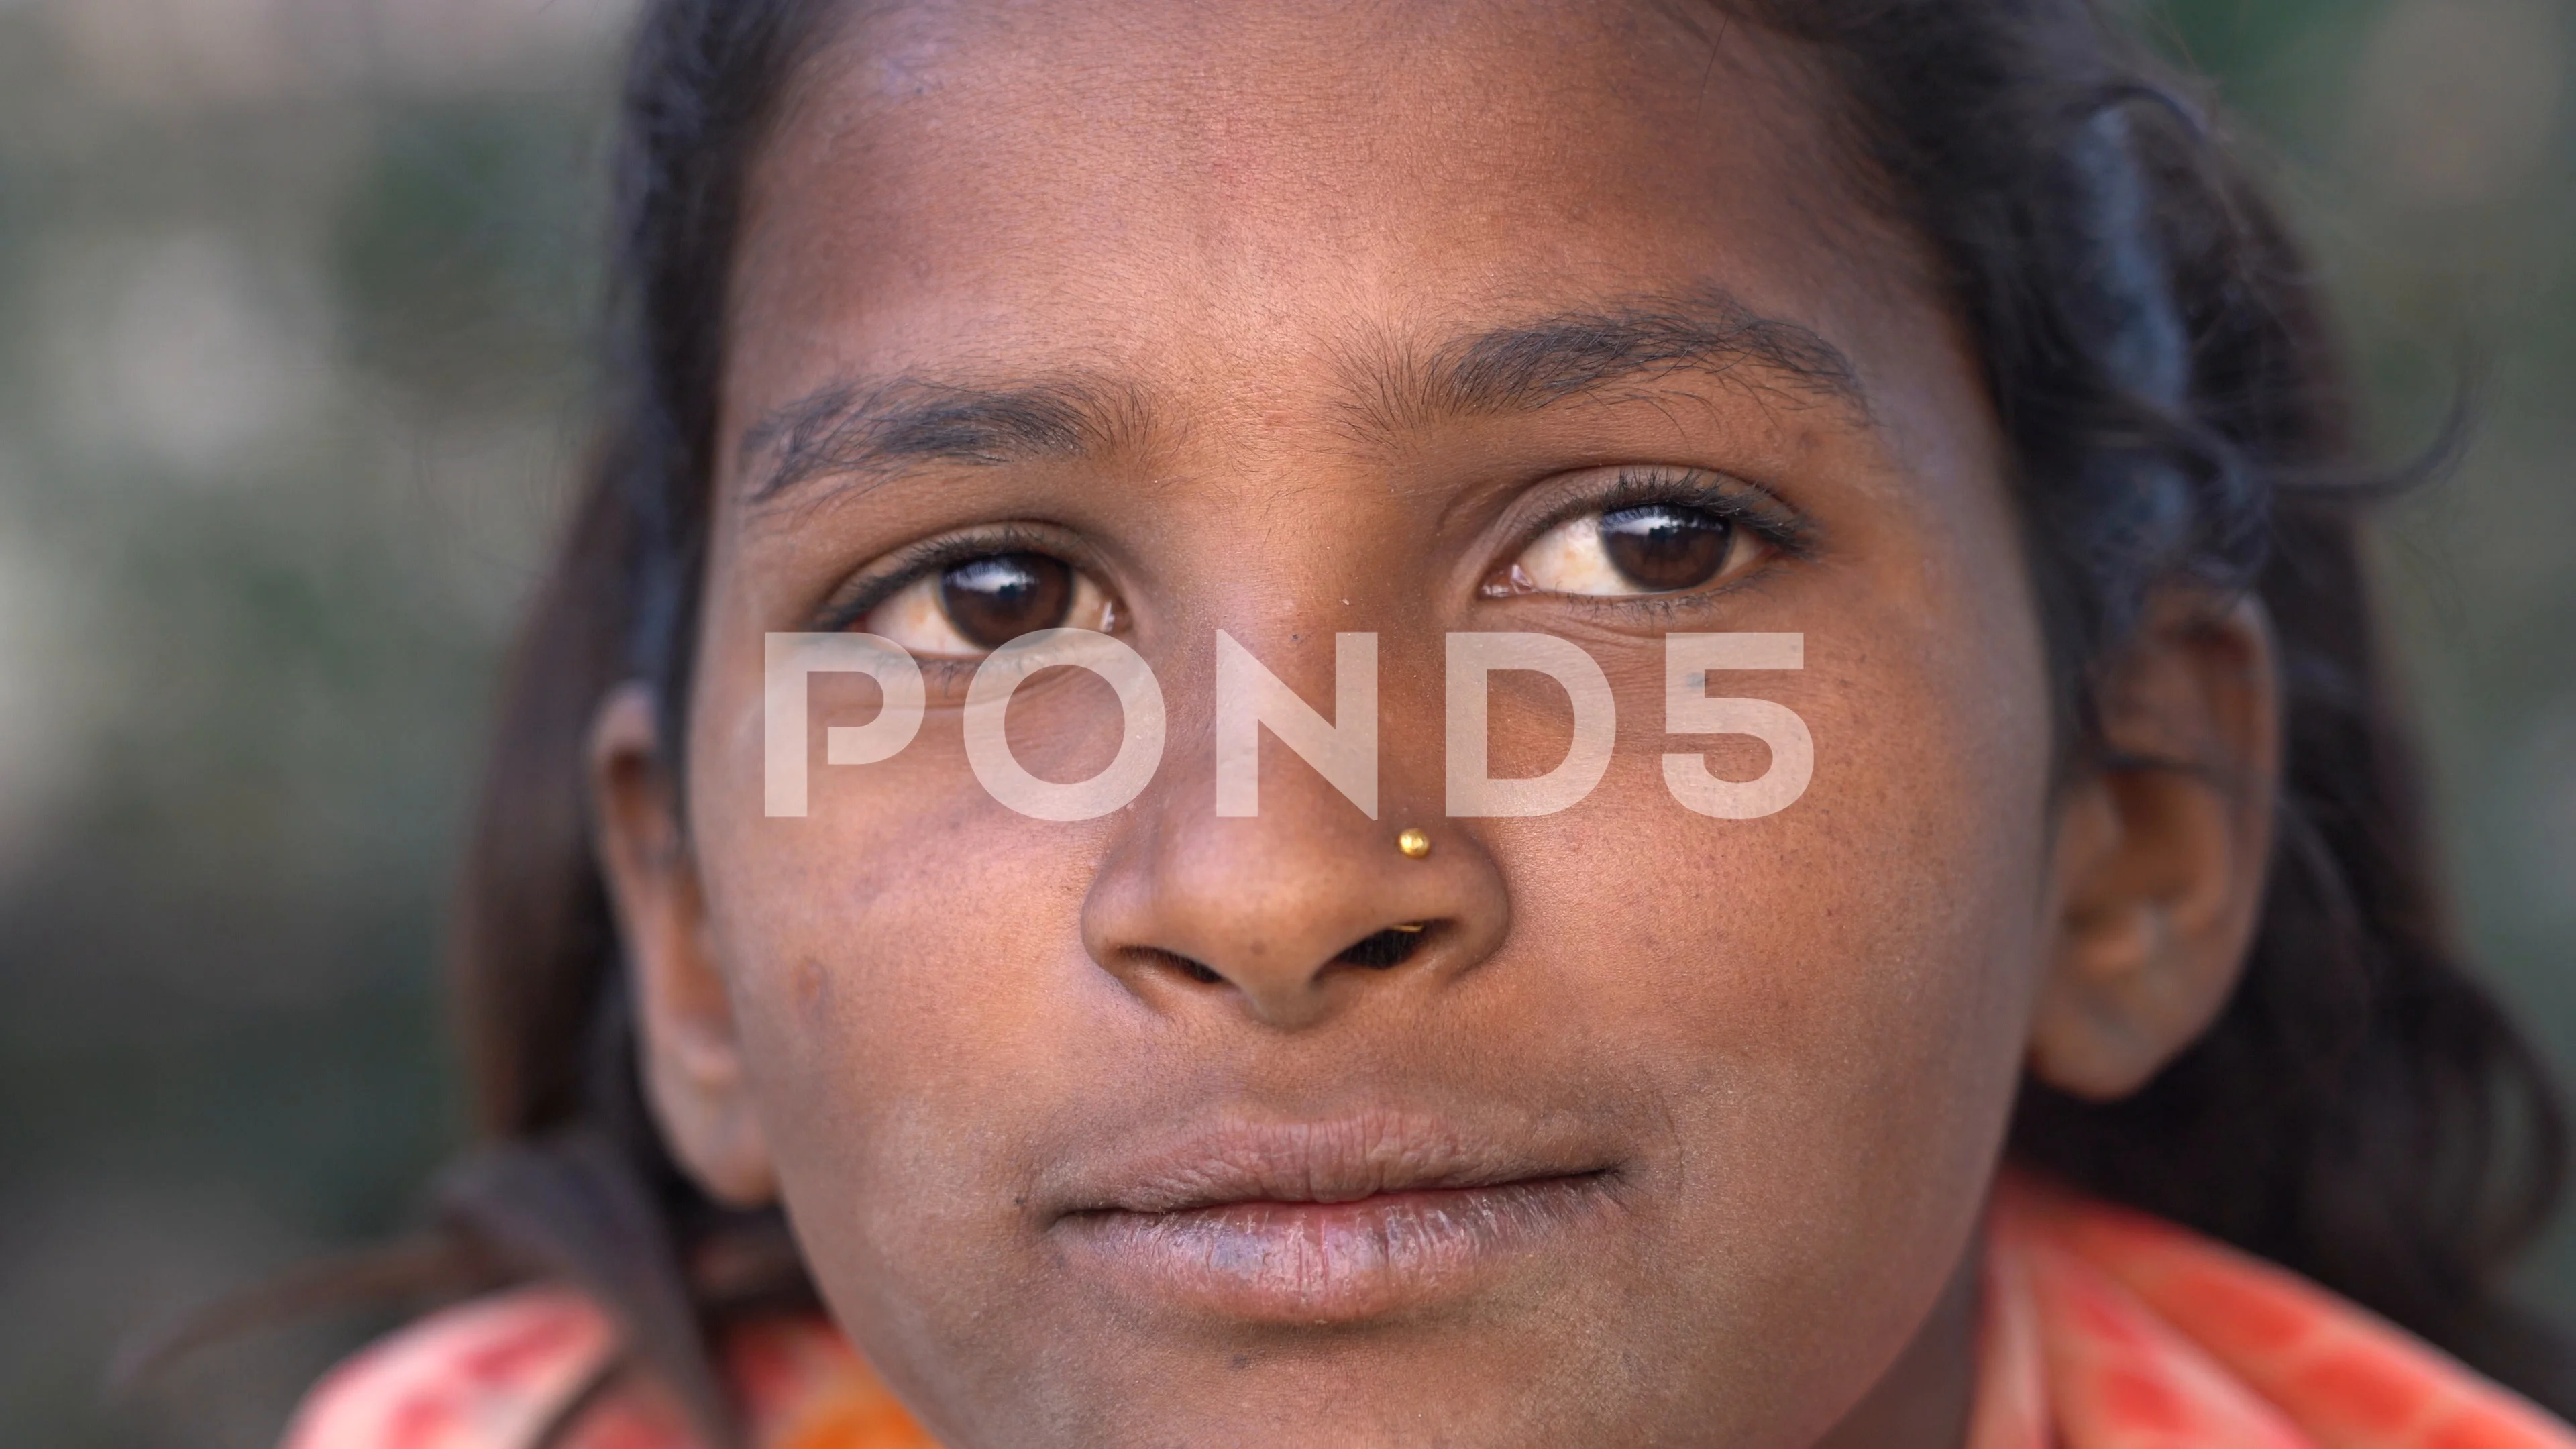 Indian poor girl on time Pushkar Camel M... | Stock Video | Pond5